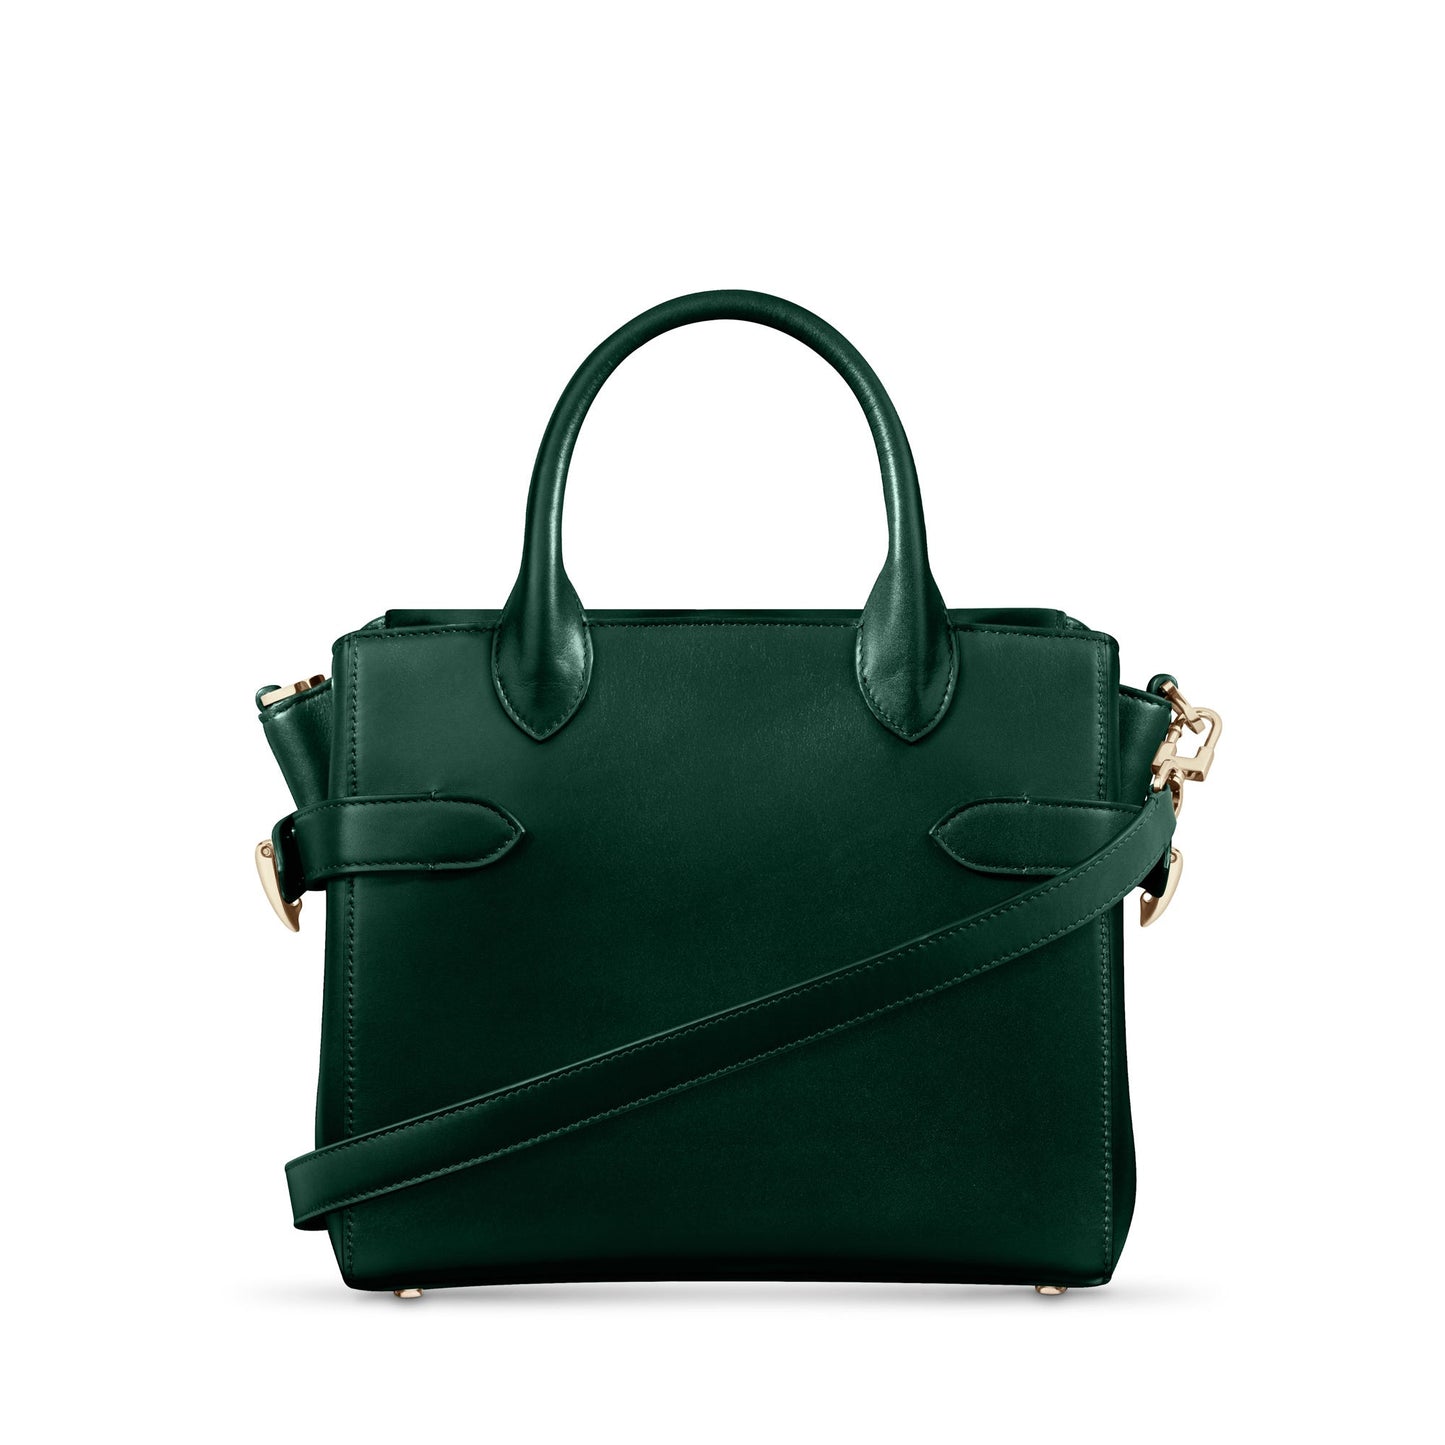 Taylor Square Handbag in Soft Leather